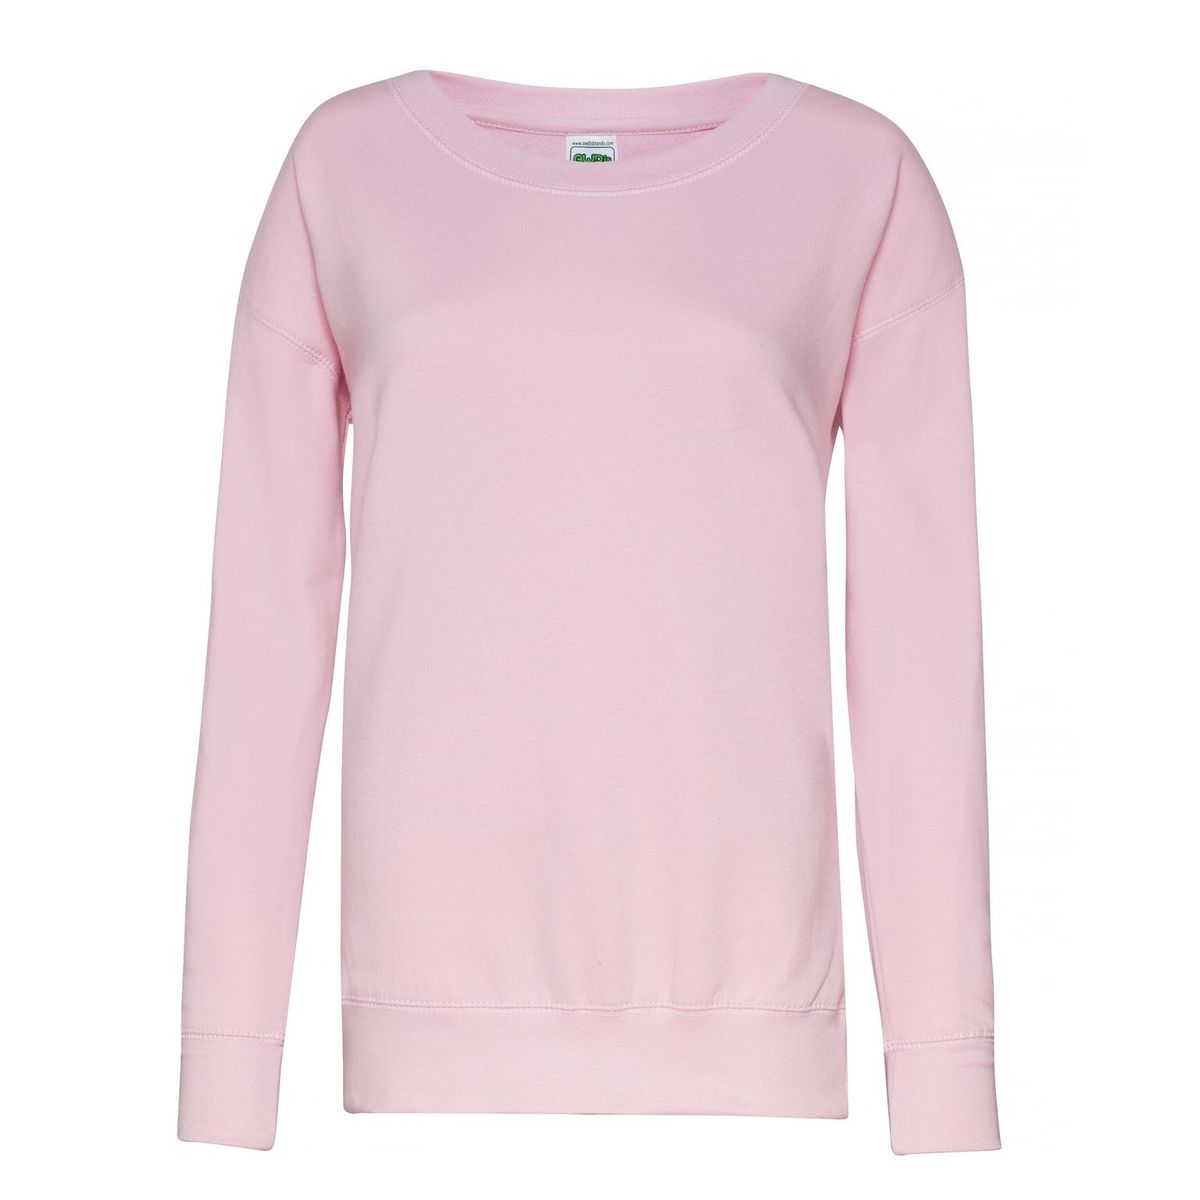 Sweatshirt Moderna Awdis - rosa - 